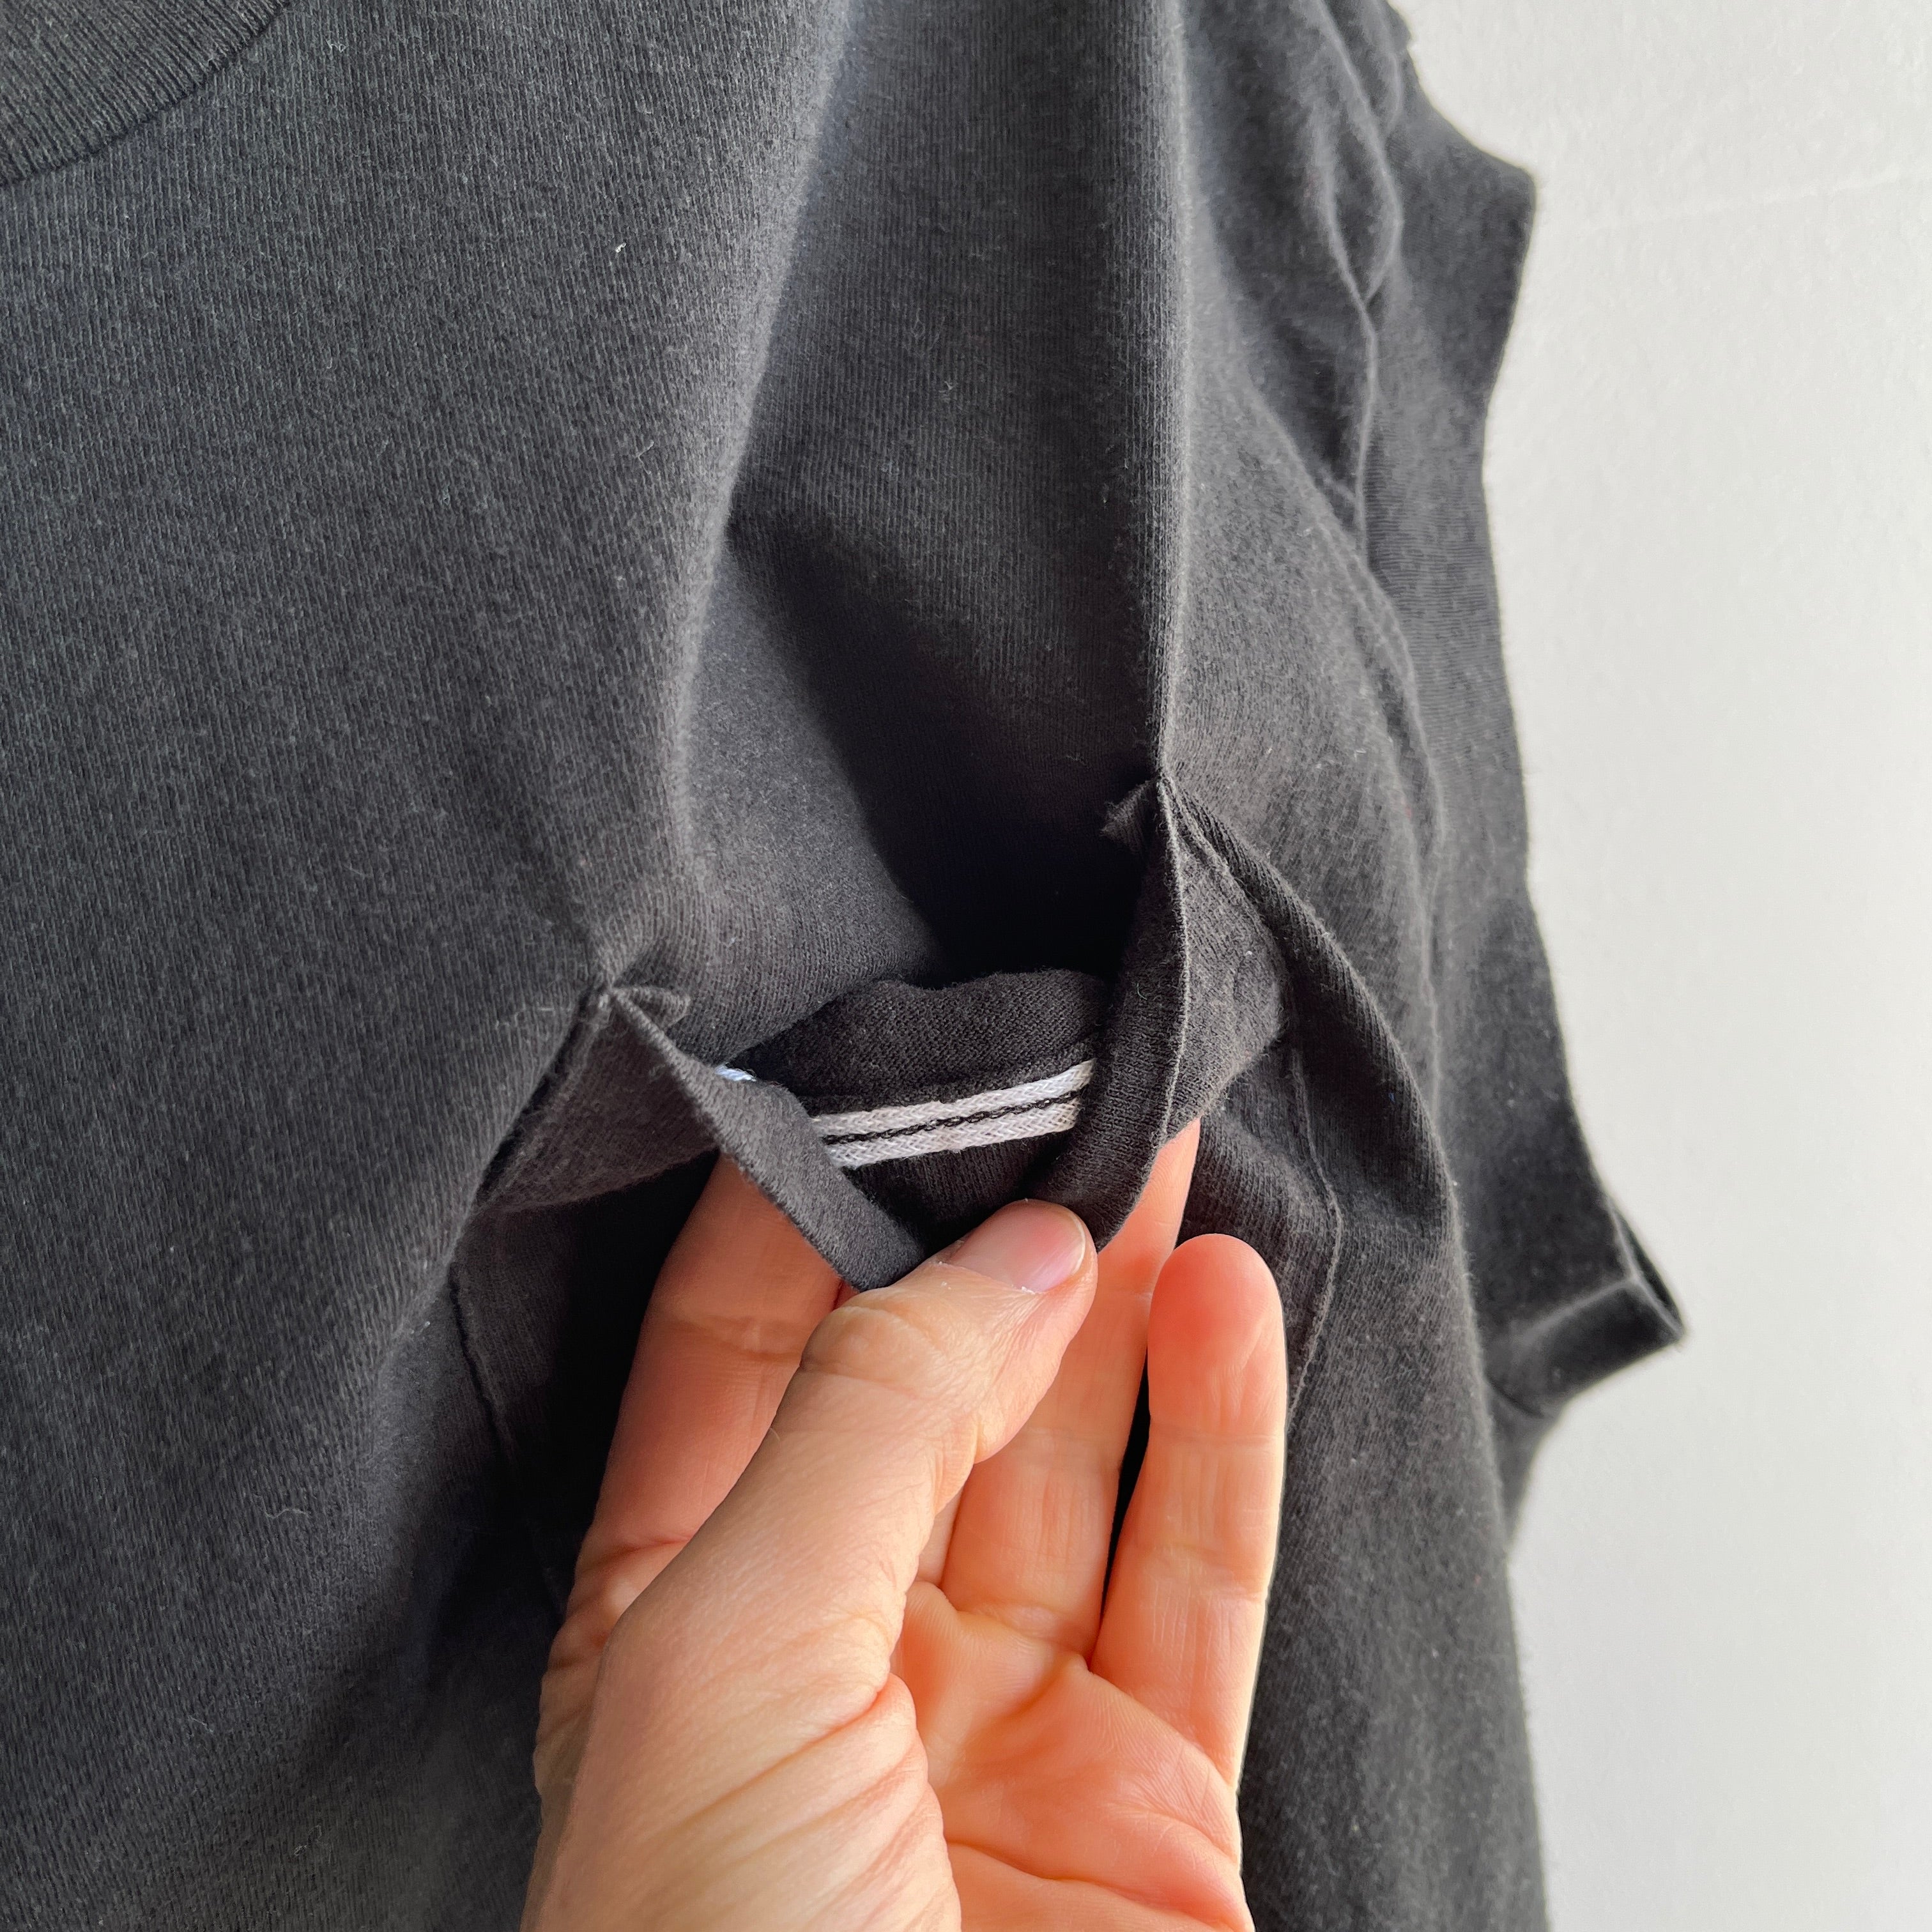 1980s Blank Black Muscle Tank T-Shirt - Selvedge Pocket